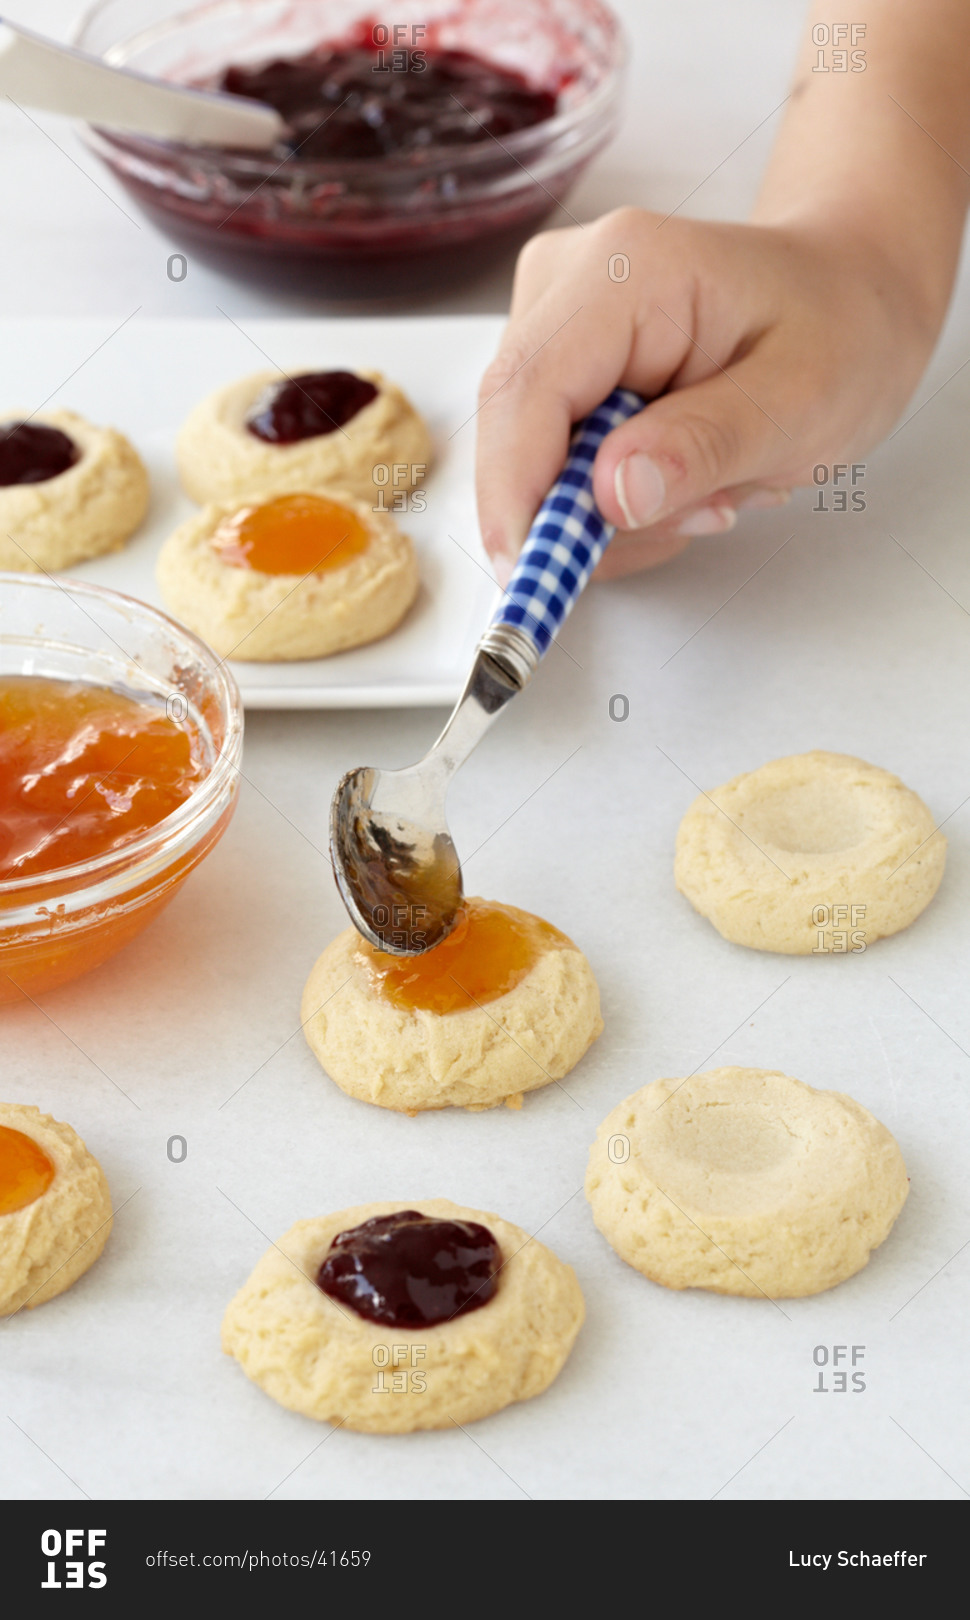 Preparing thumbprint cookies with various jam types at home